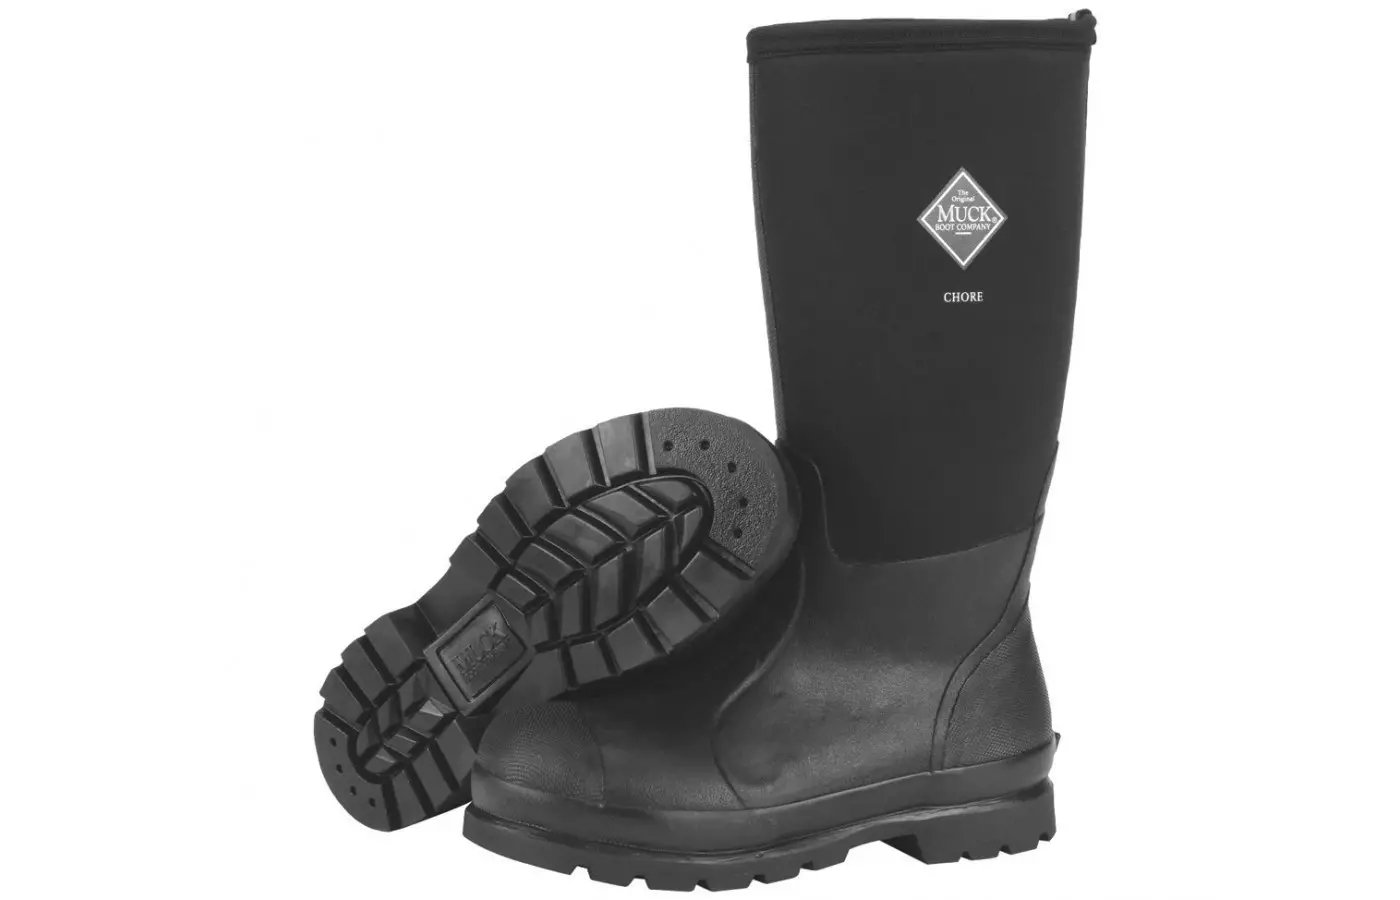 Muck Chore Boots Hi-Cut pair in black